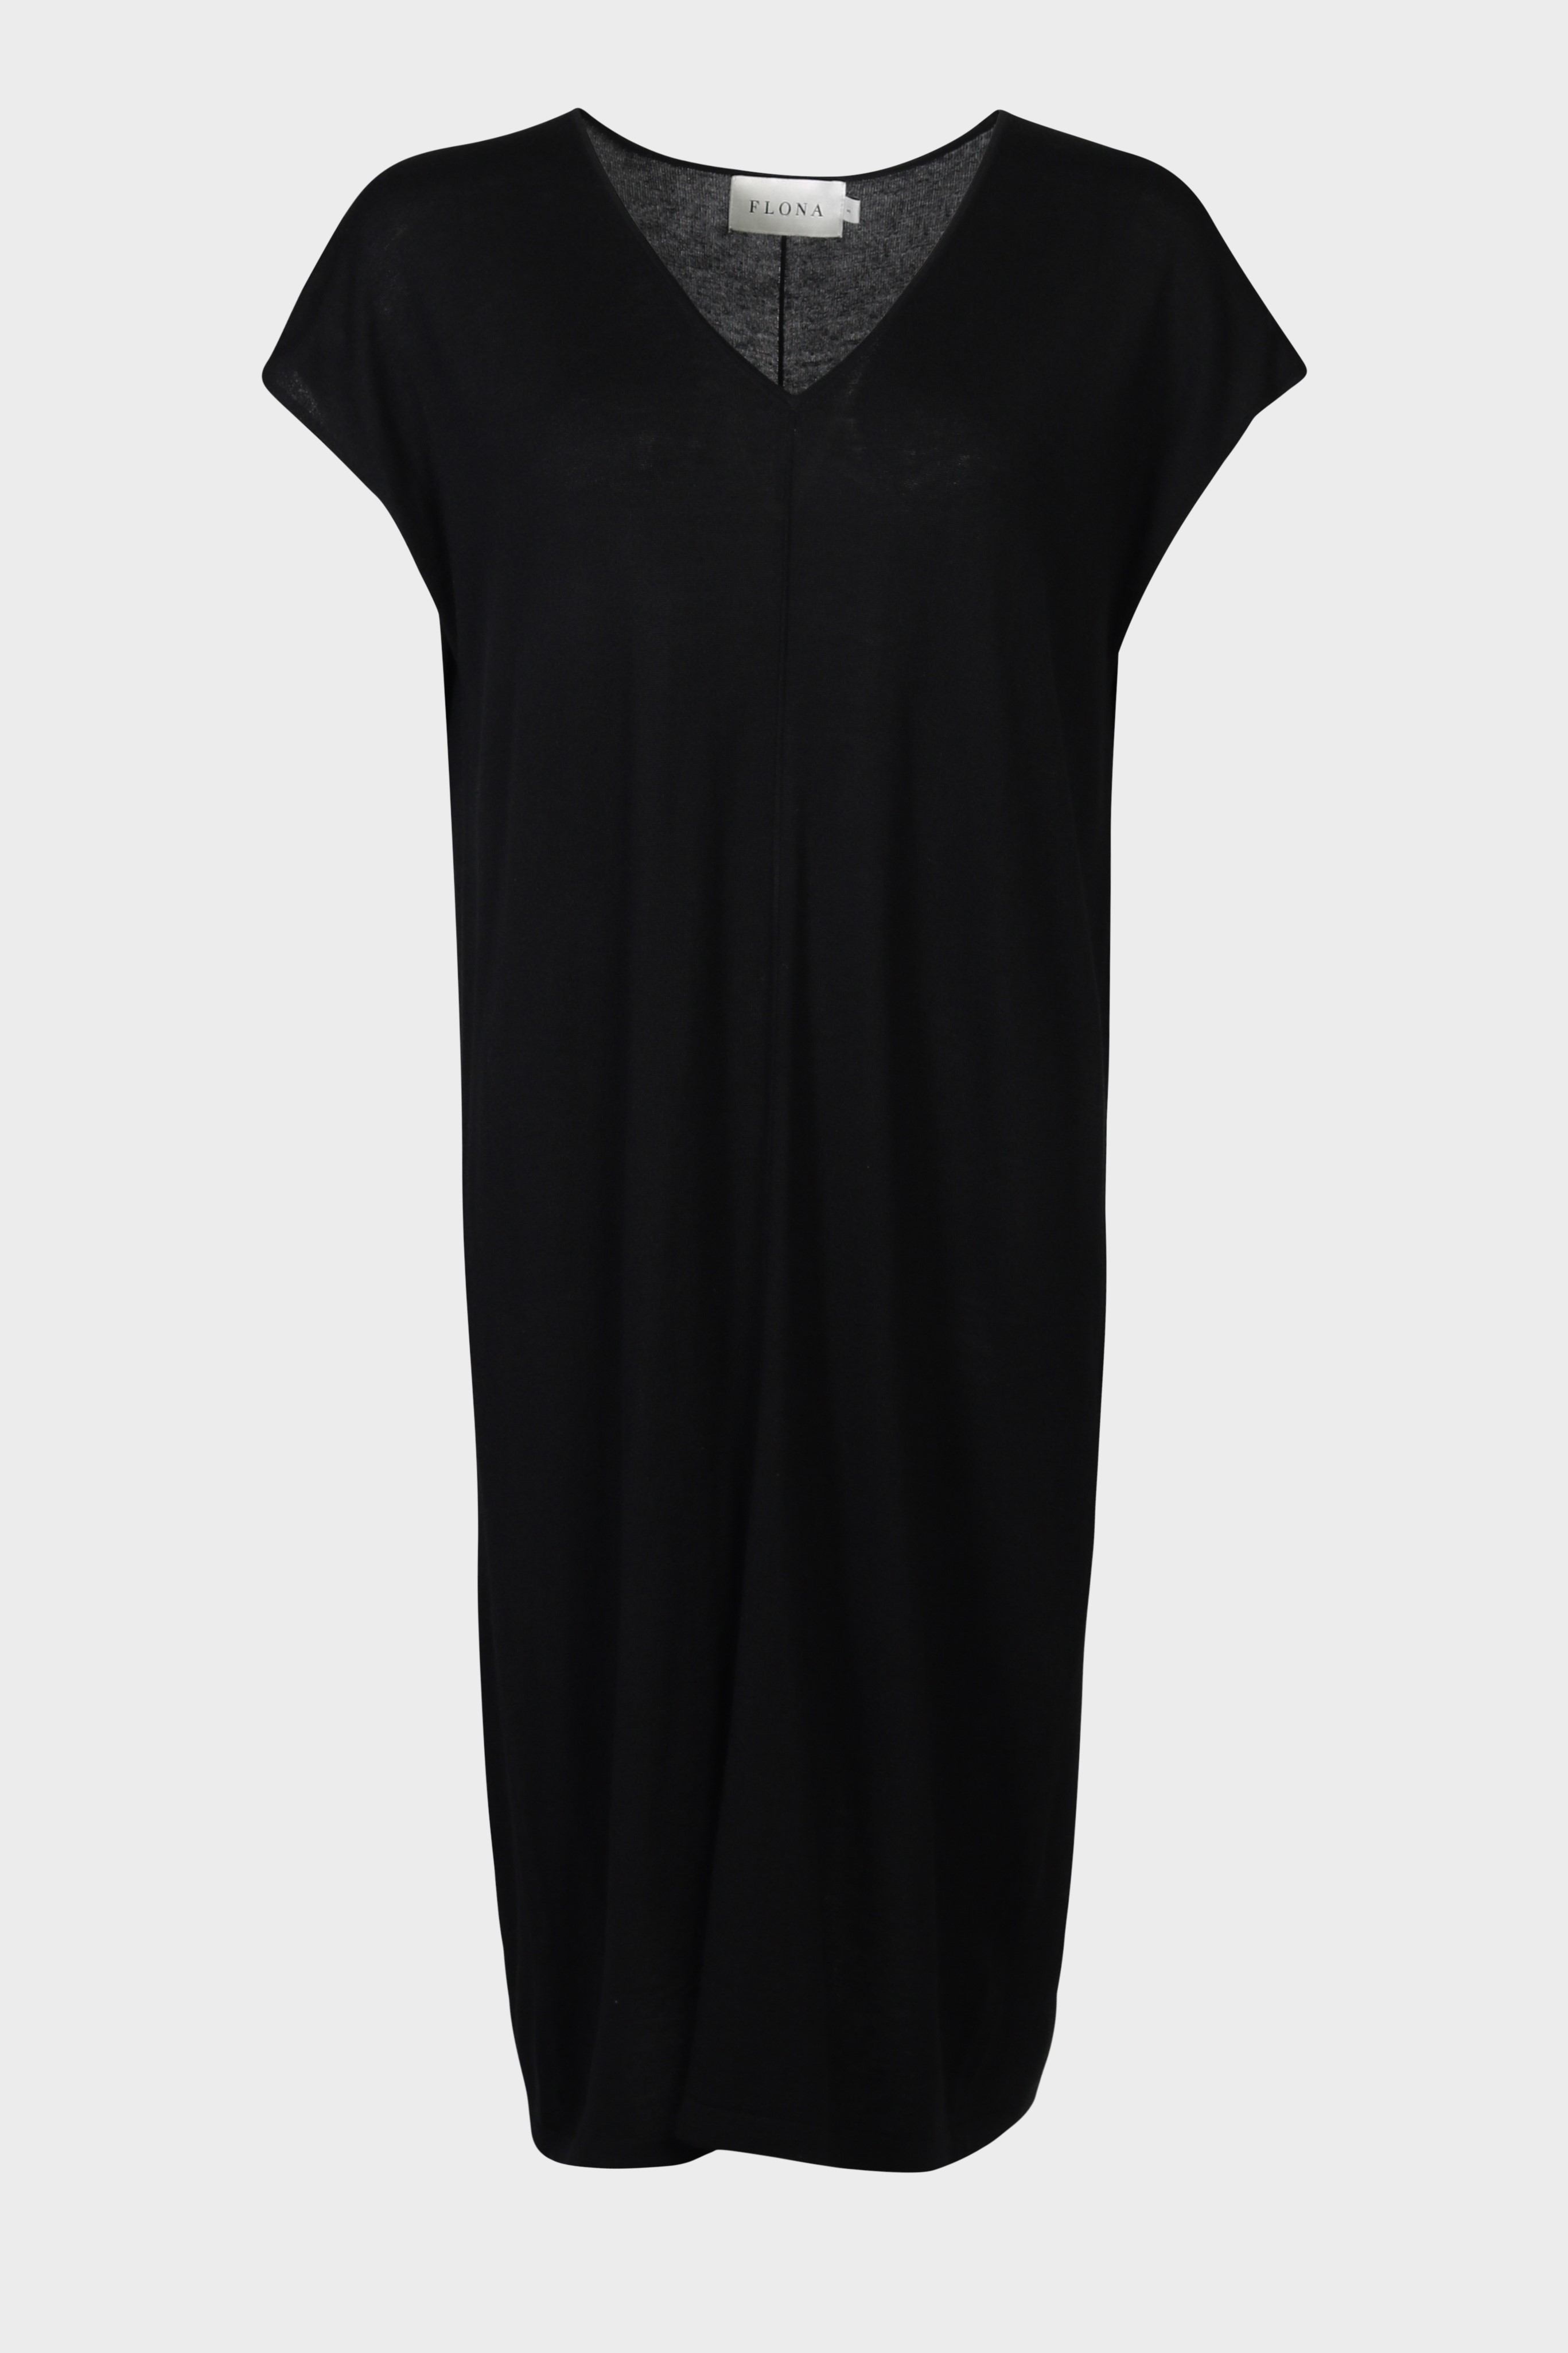 FLONA Cashmere/Silk Knit Dress in Black XS